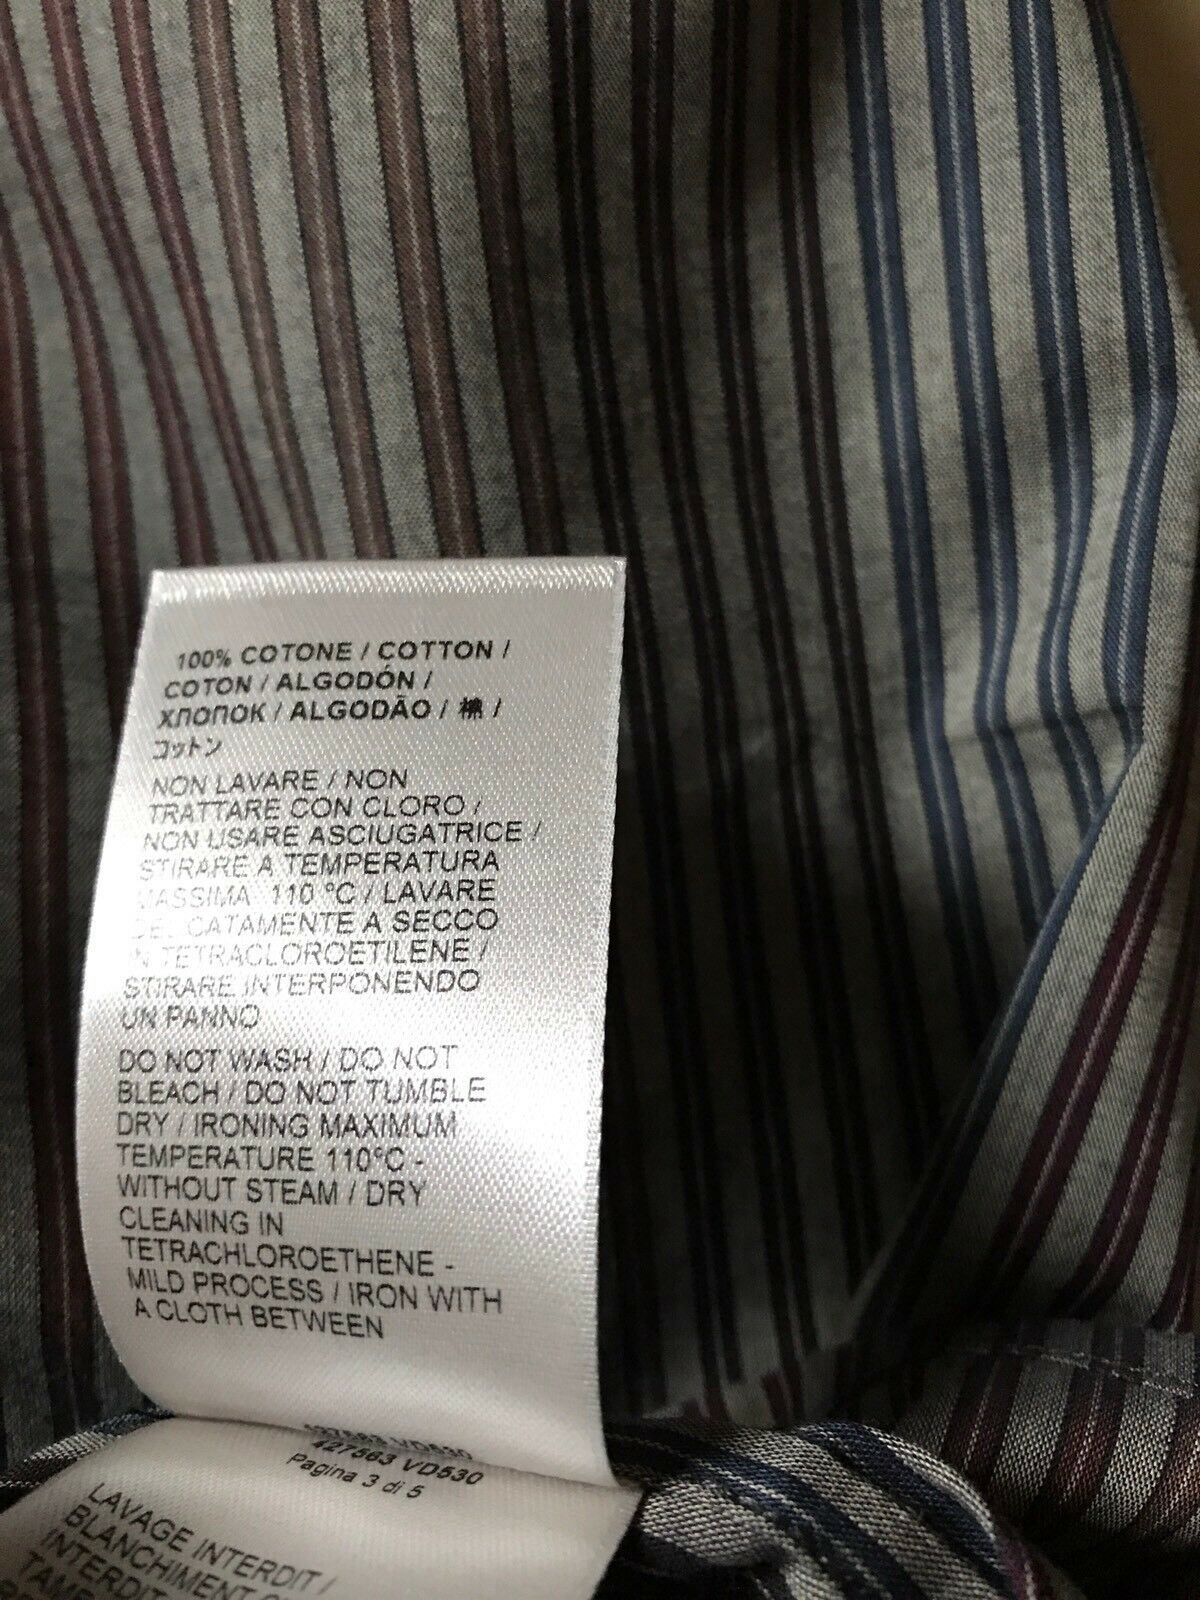 NWT $680 Bottega Veneta Mens Dress Shirt Multi-Color 39/15.5 Italy